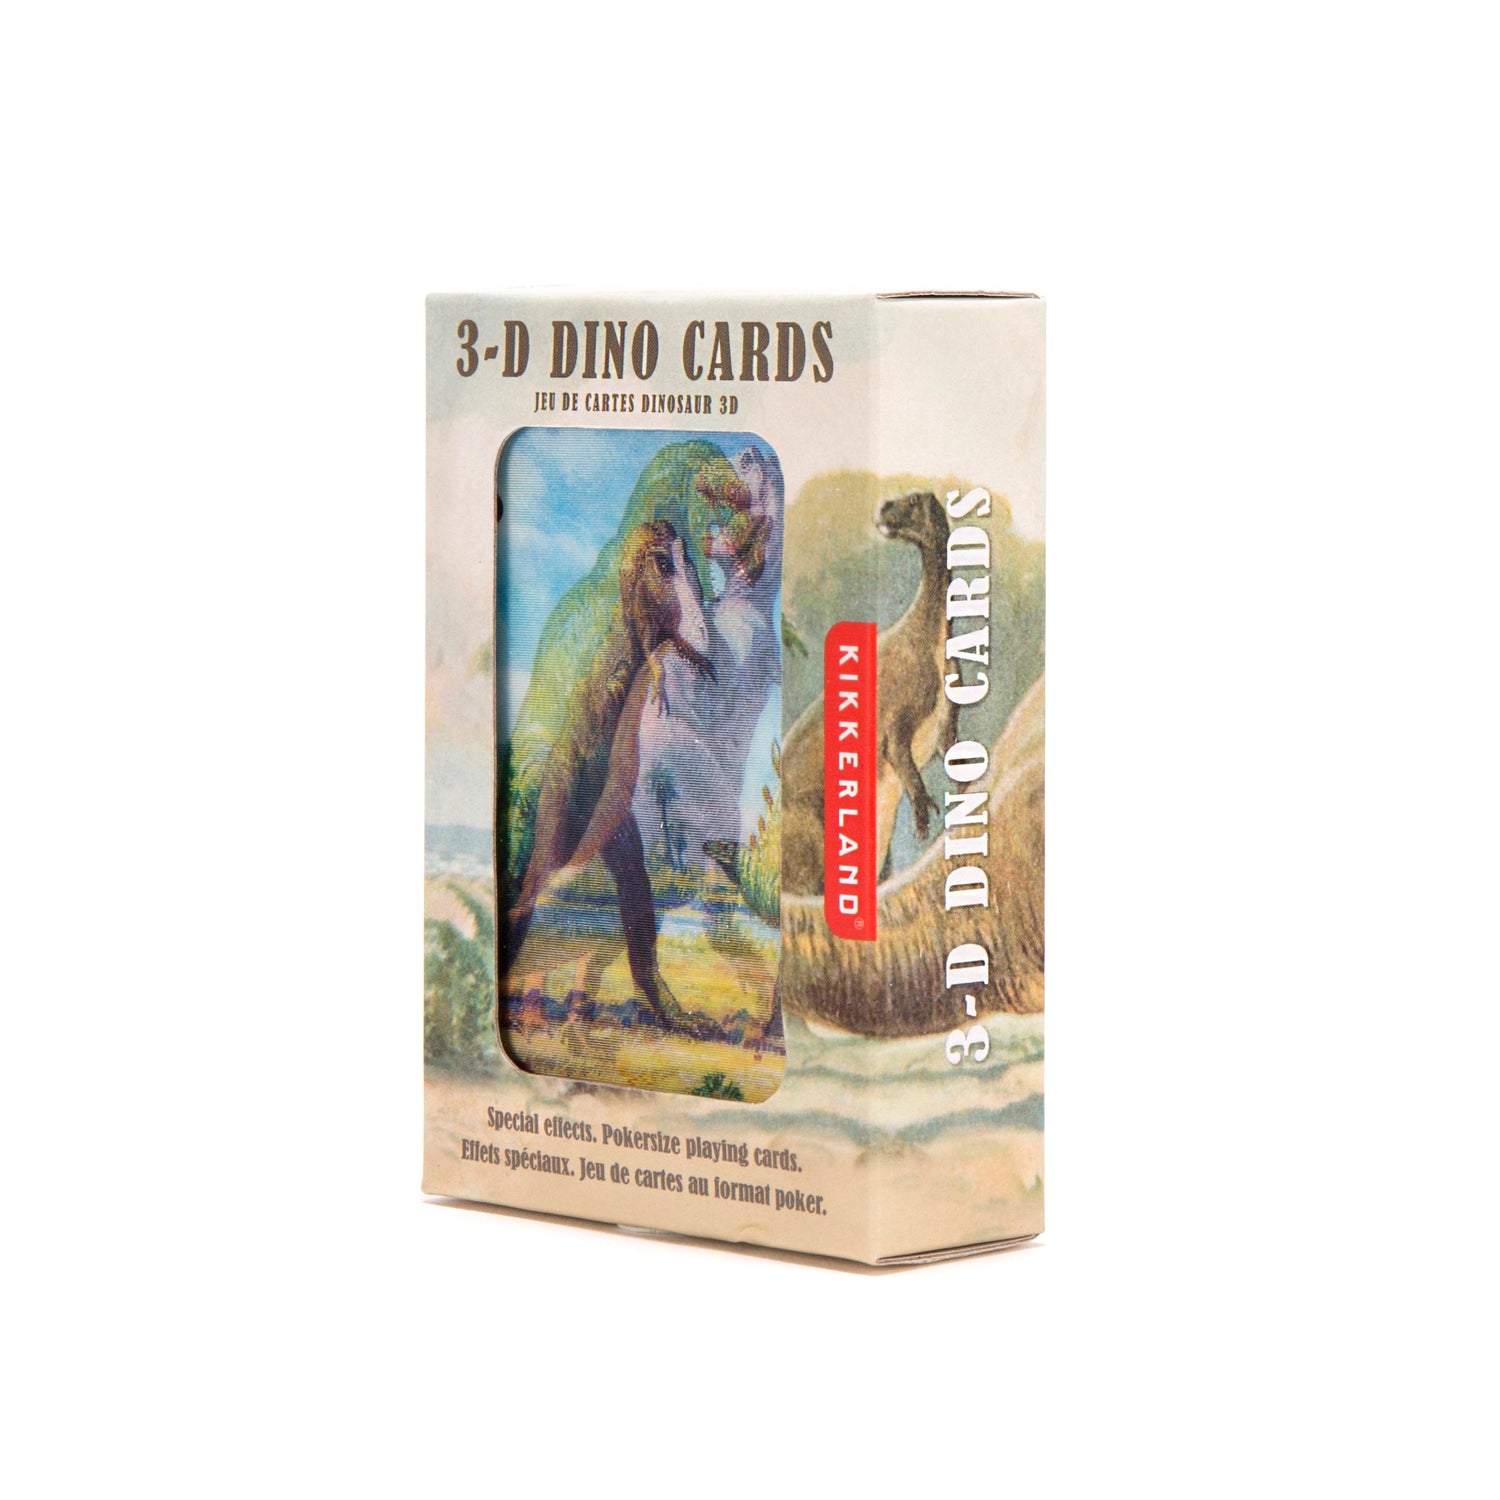 3-D Dino Cards